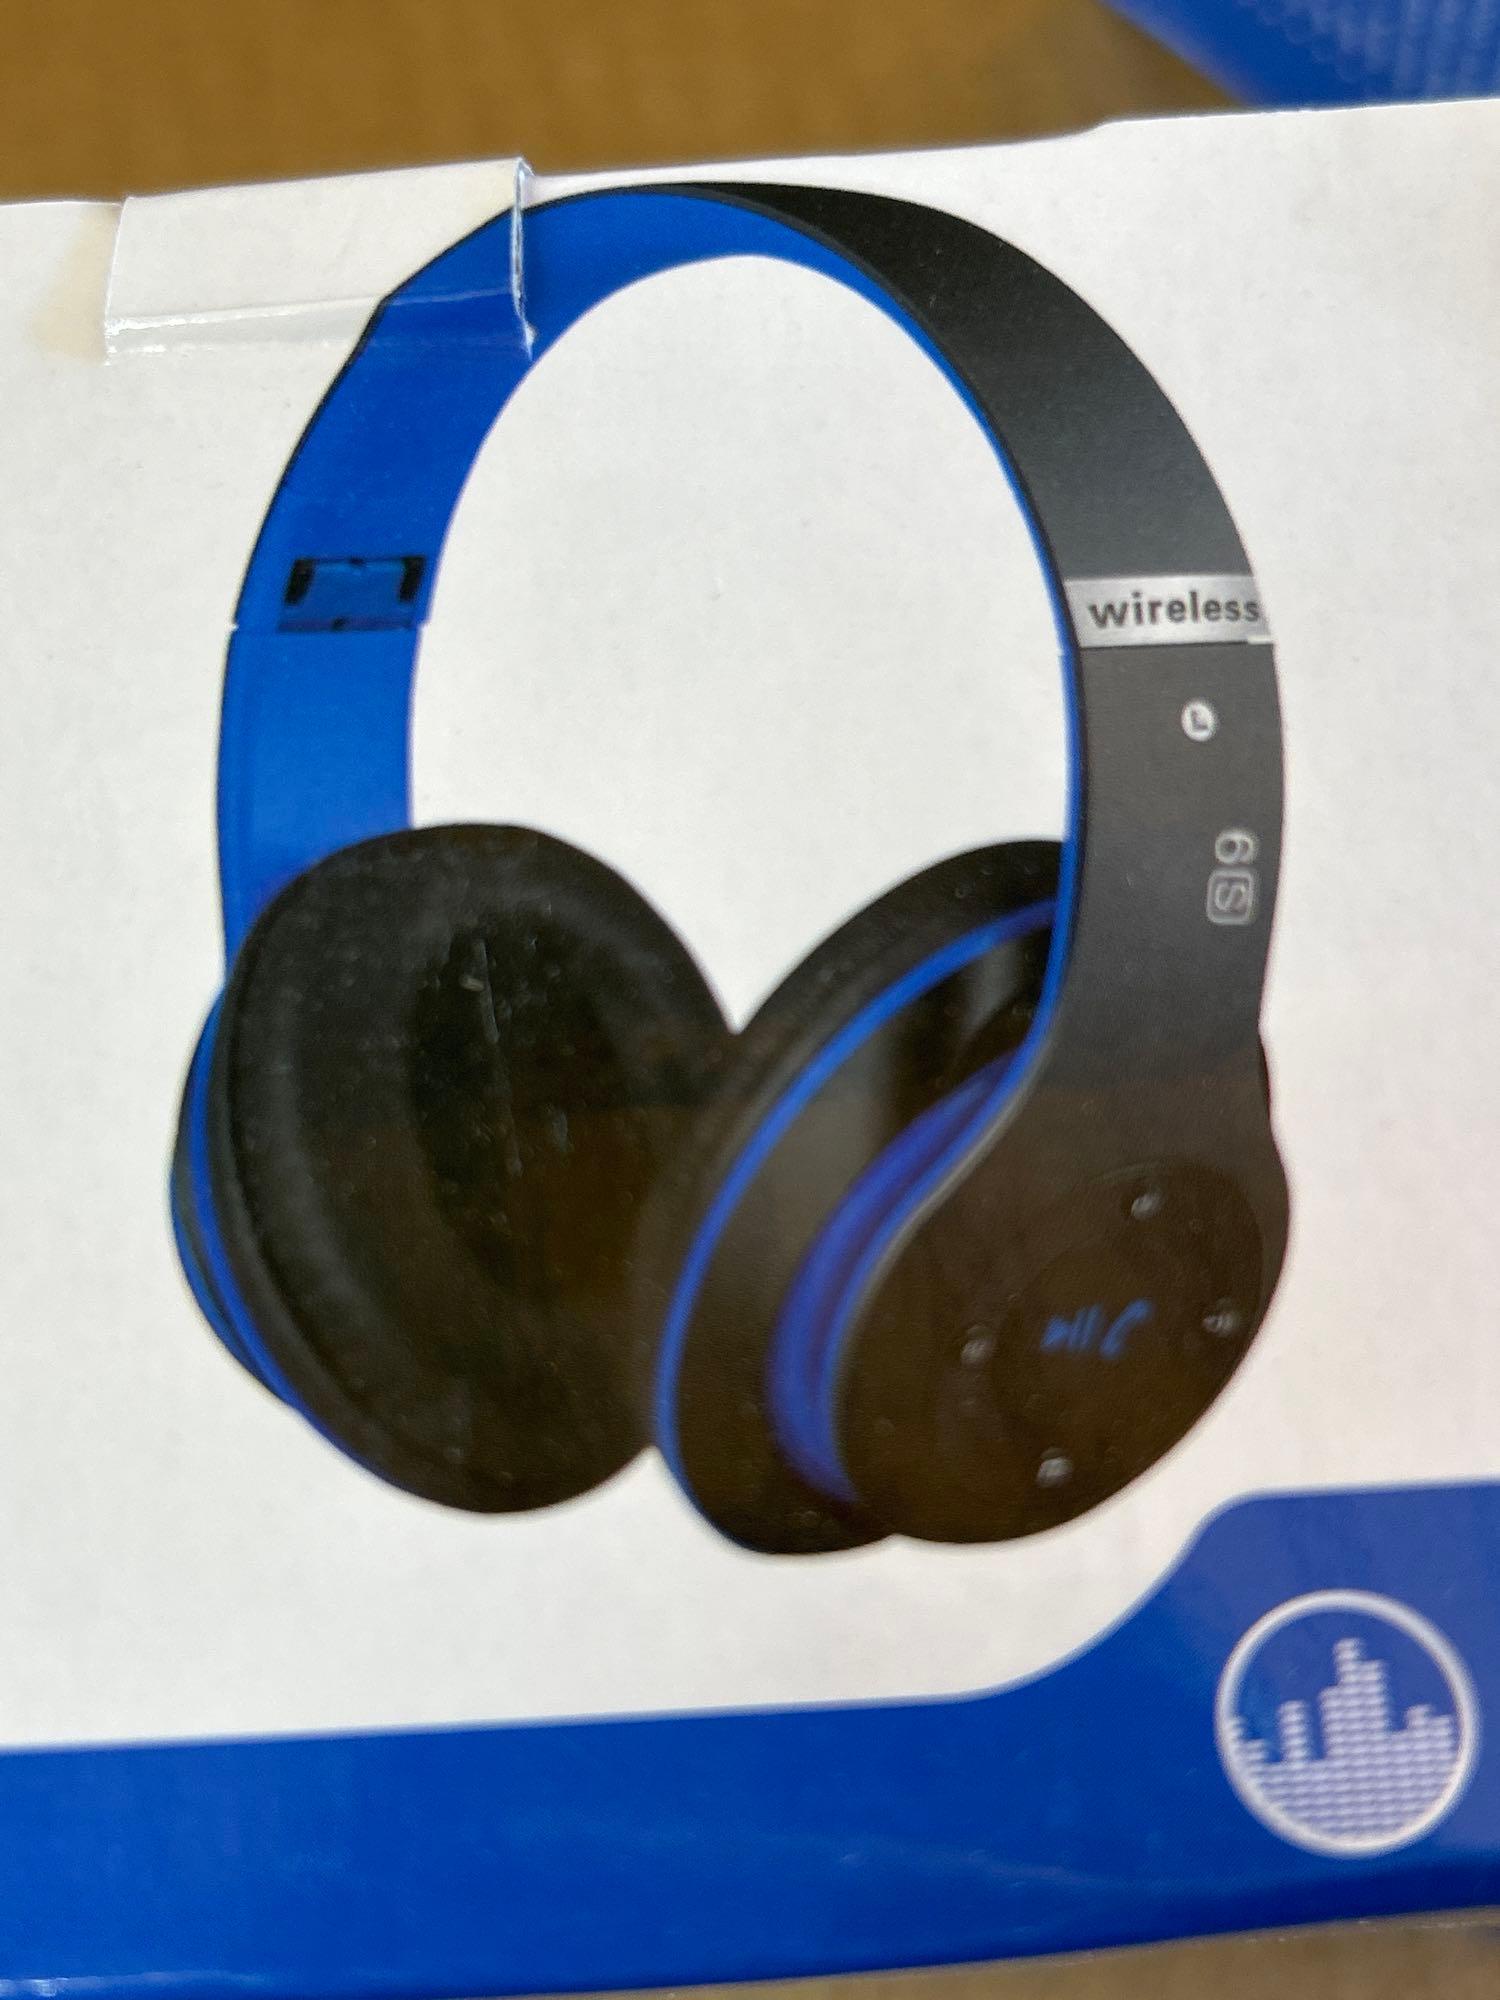 Zhuolang 6S Wireless Headphones Over Ear (Blue/Black) - $24.99 MSRP